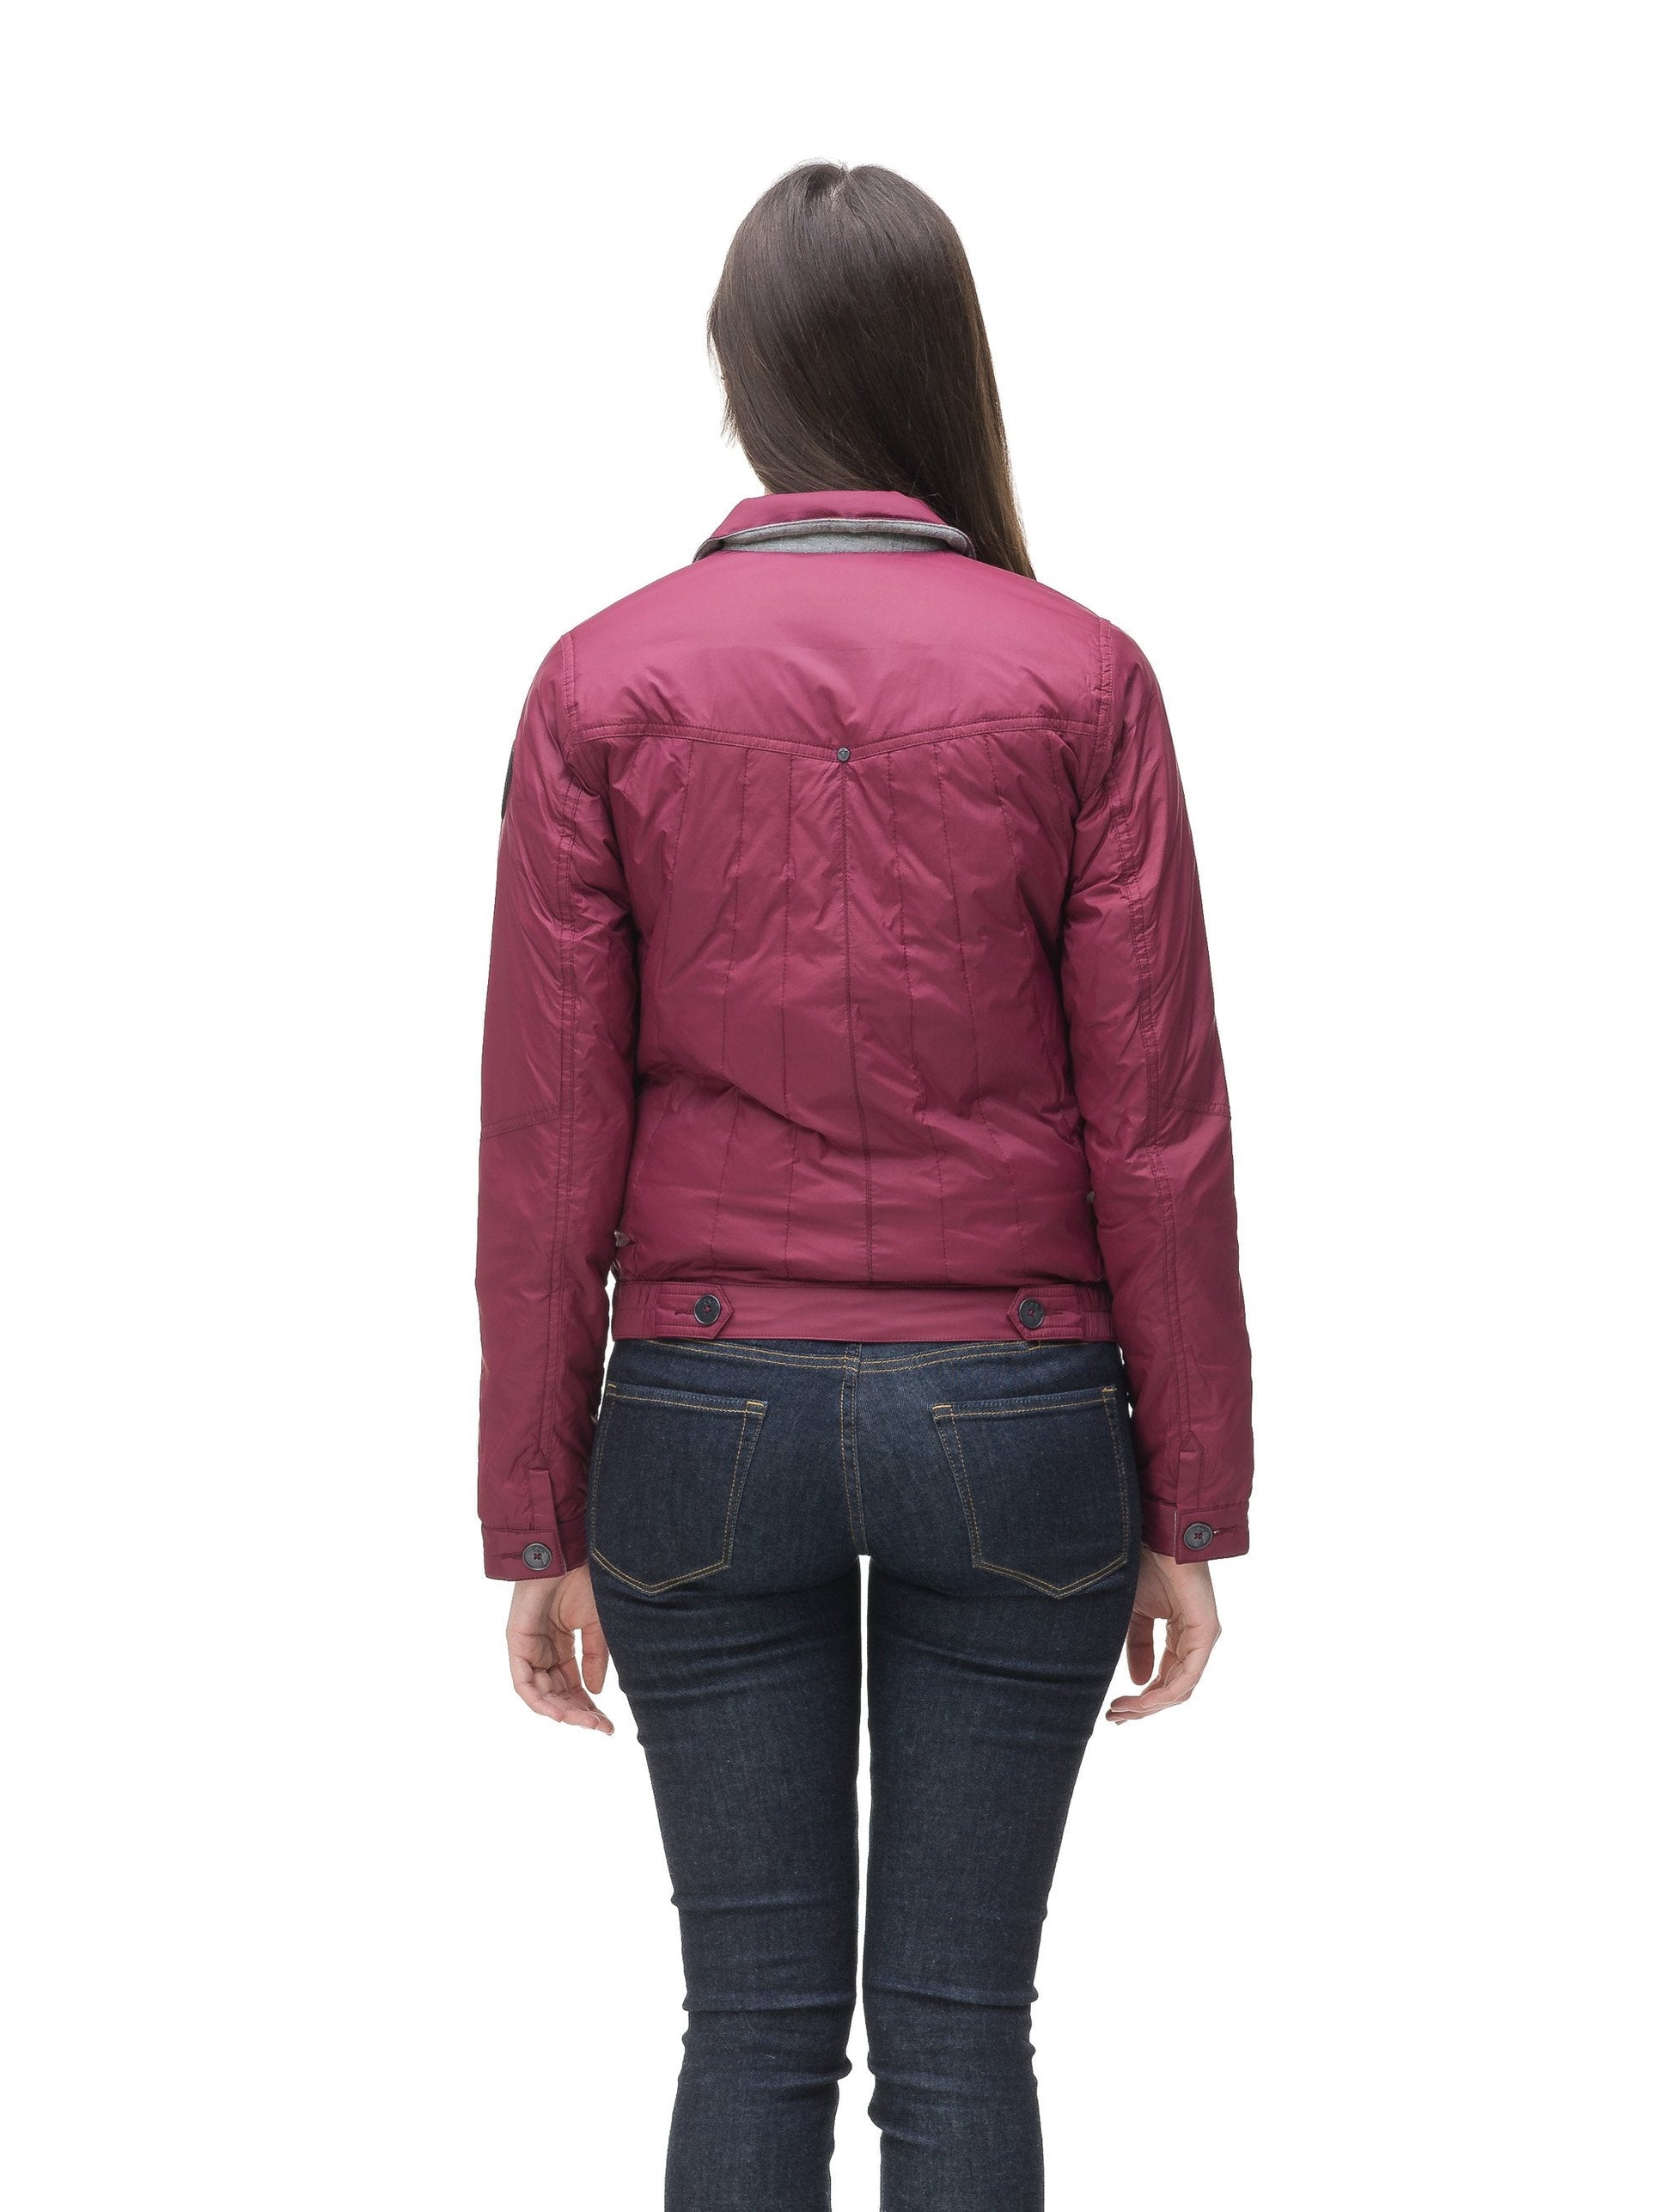 Lightweight cropped women's jacket in Berry, Denim Blue or Black